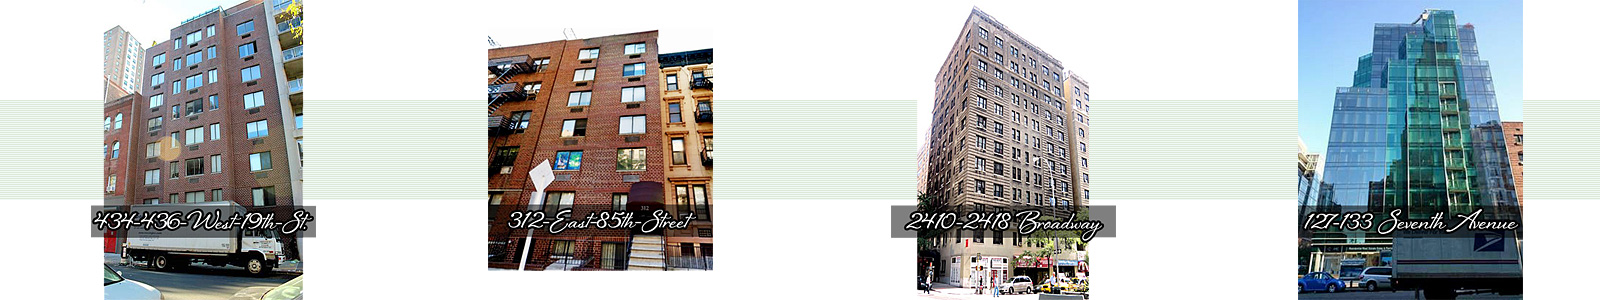 NY real estate slideshow b5